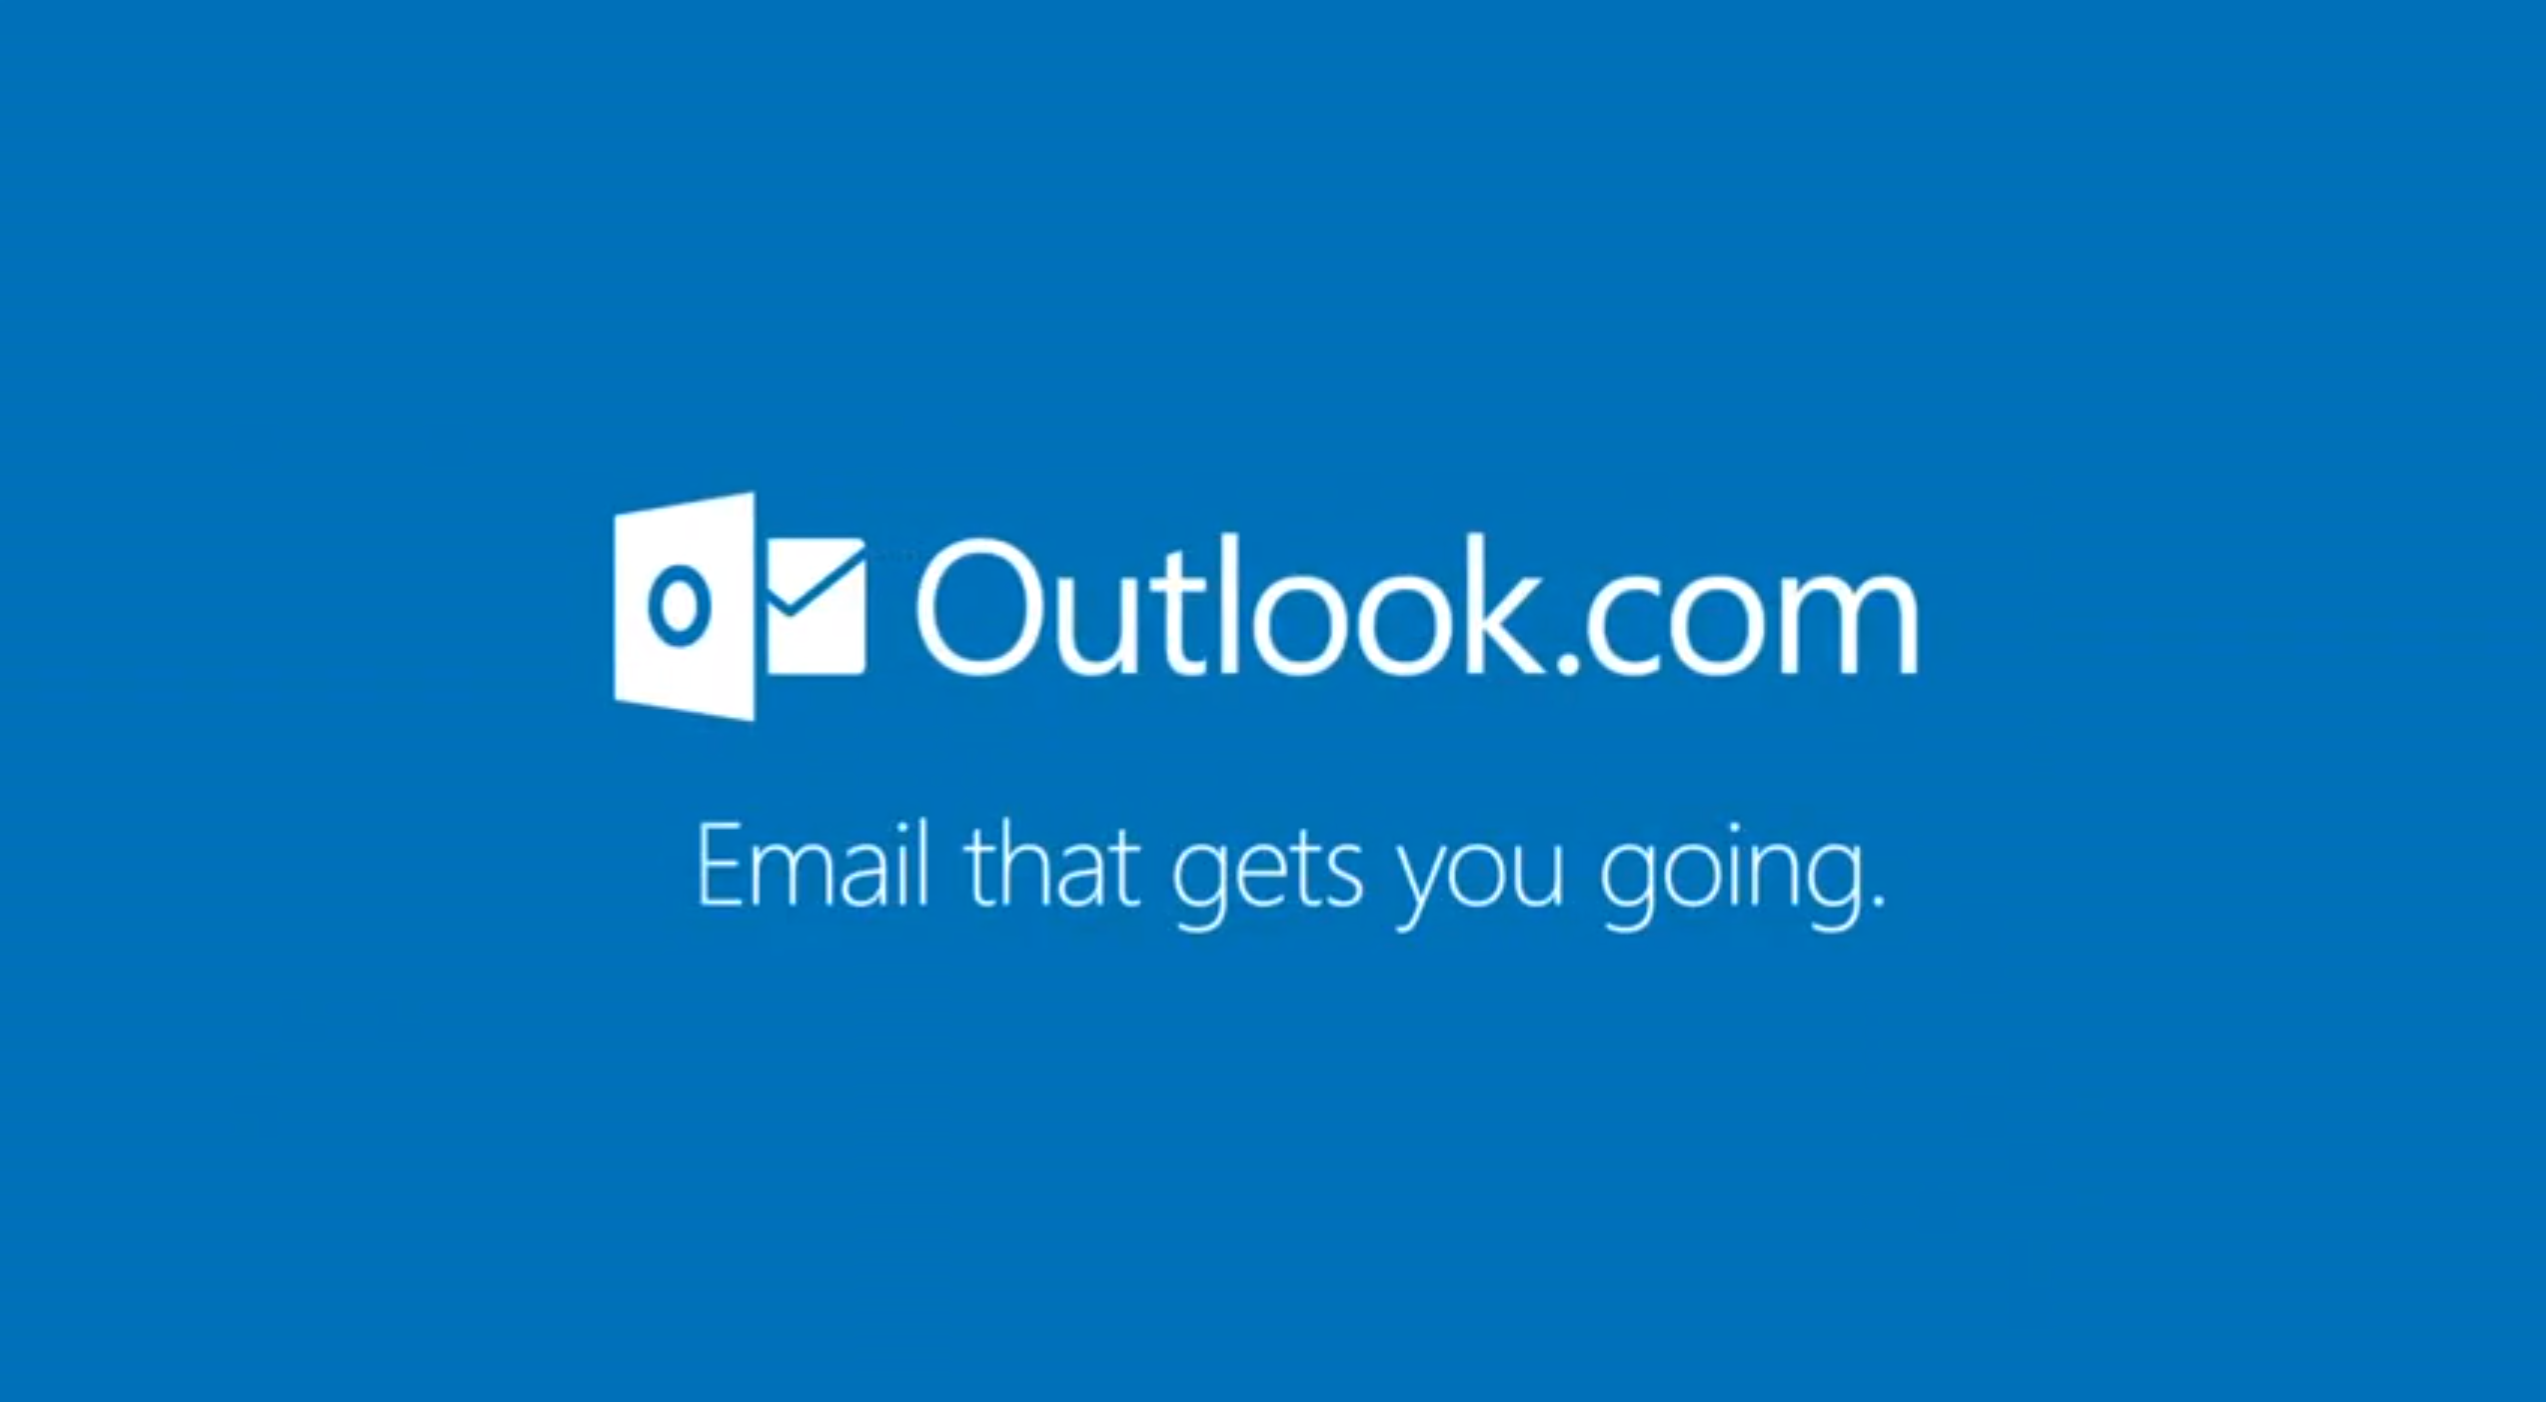 Cách sửa lỗi Outlook “There is no email program associated” trên Windows 10